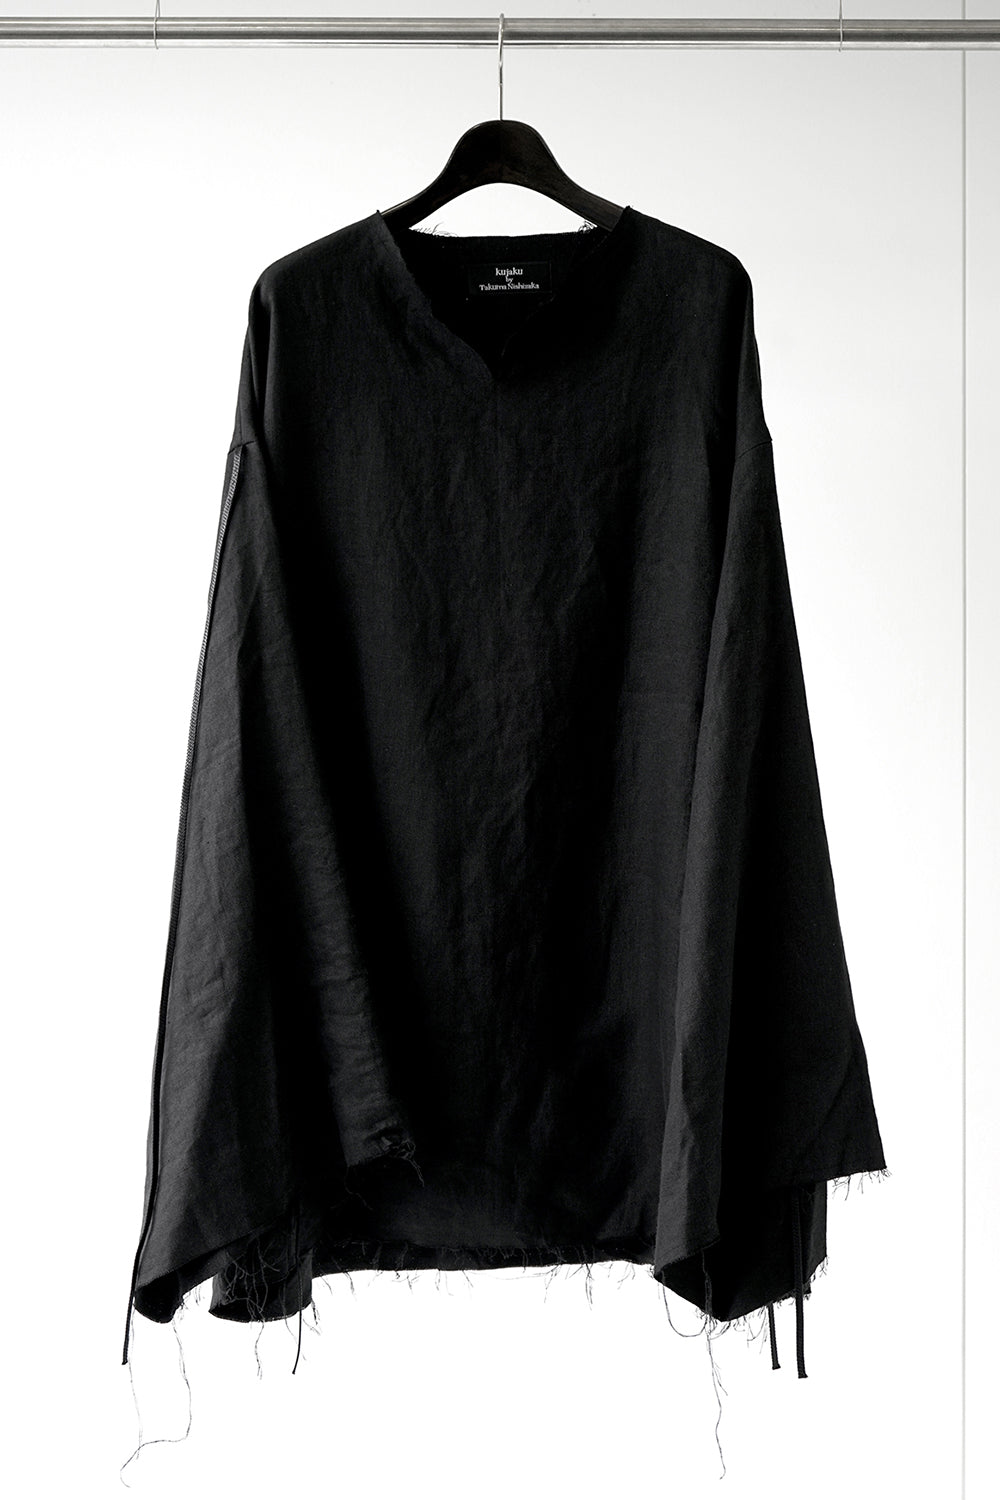 kujaku 2022SS enbaku pullover blackシャツ - batimexpo.com